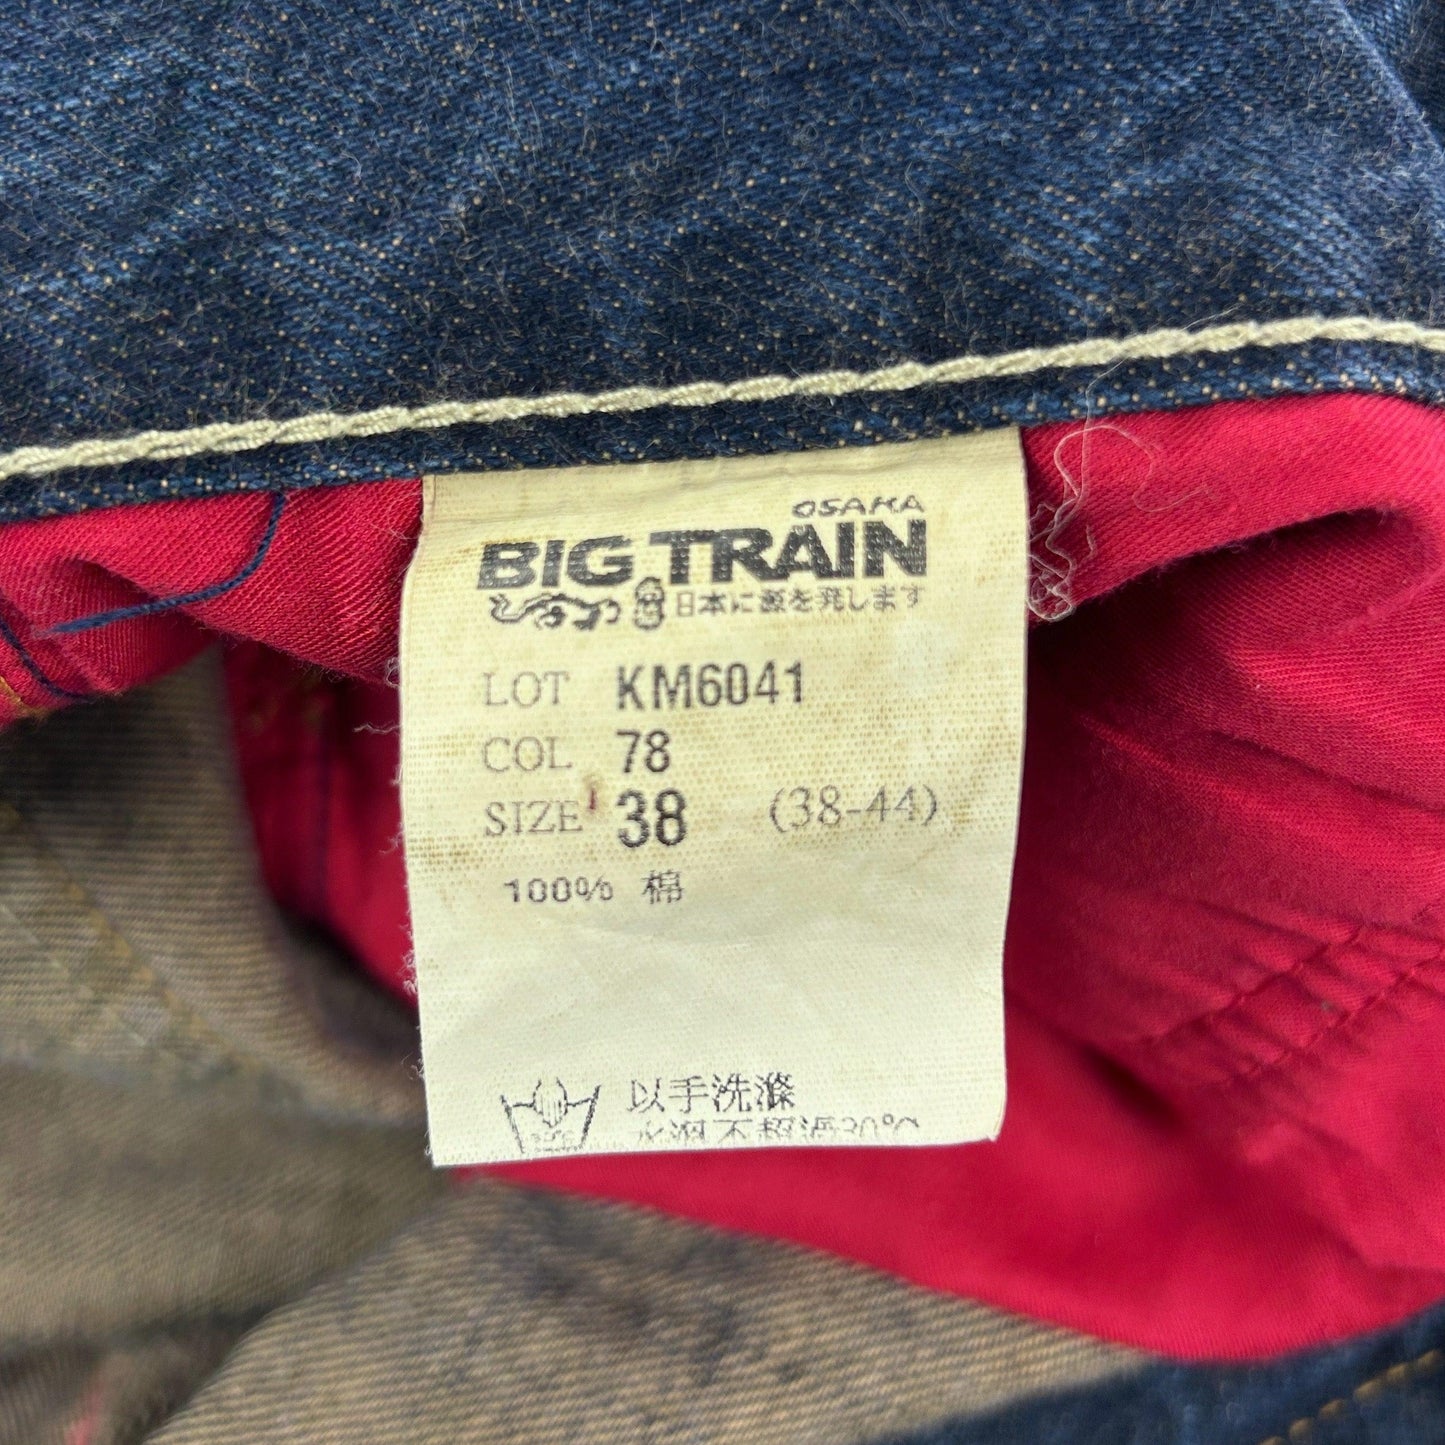 Vintage Big Train Japanese Denim Jeans Size W36 - Known Source